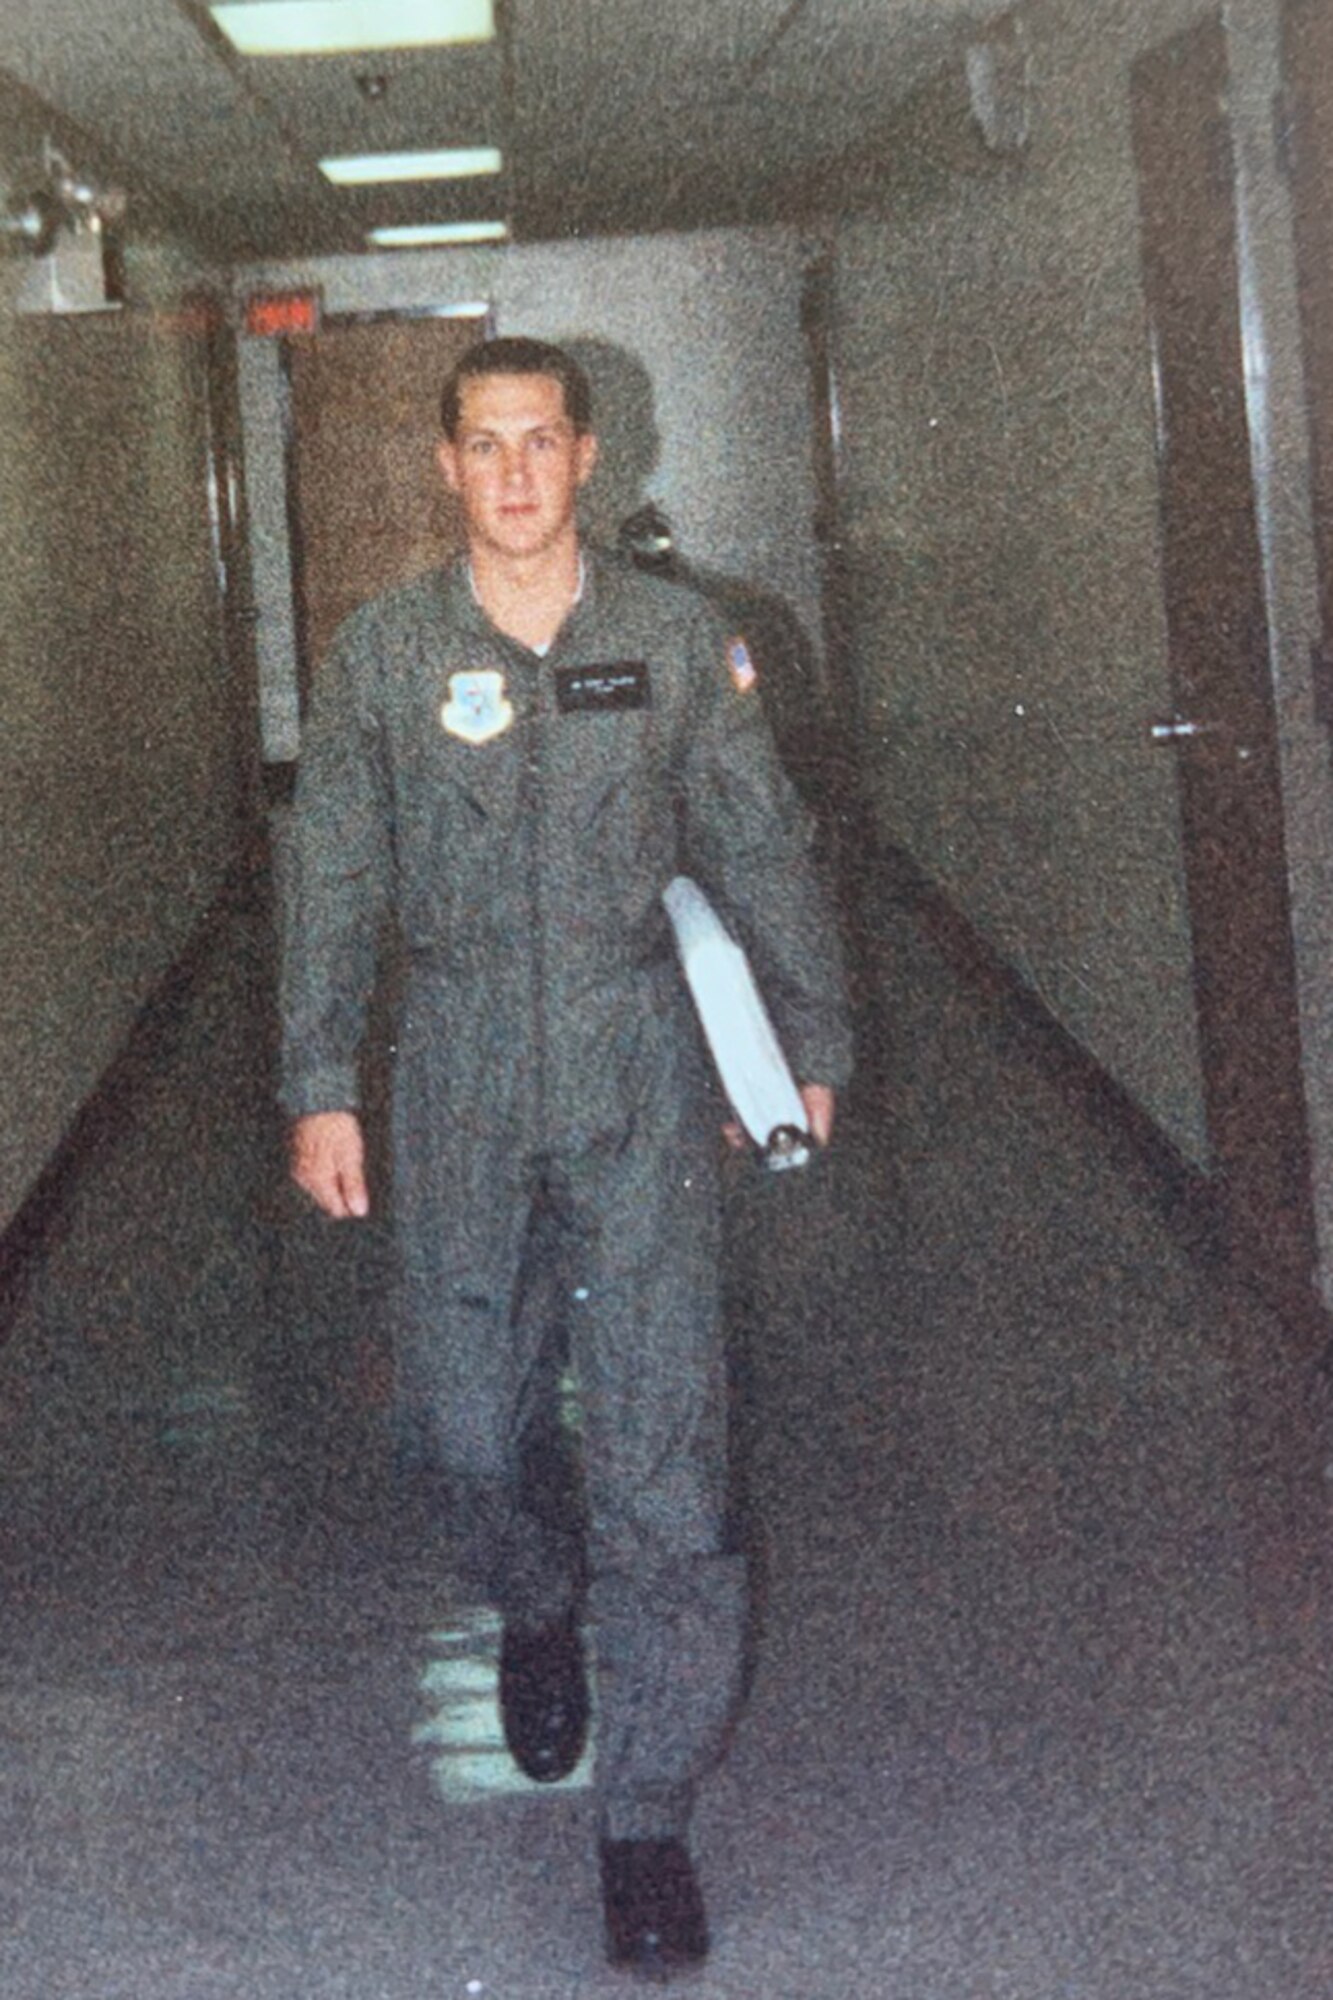 Airman walks down a hallway